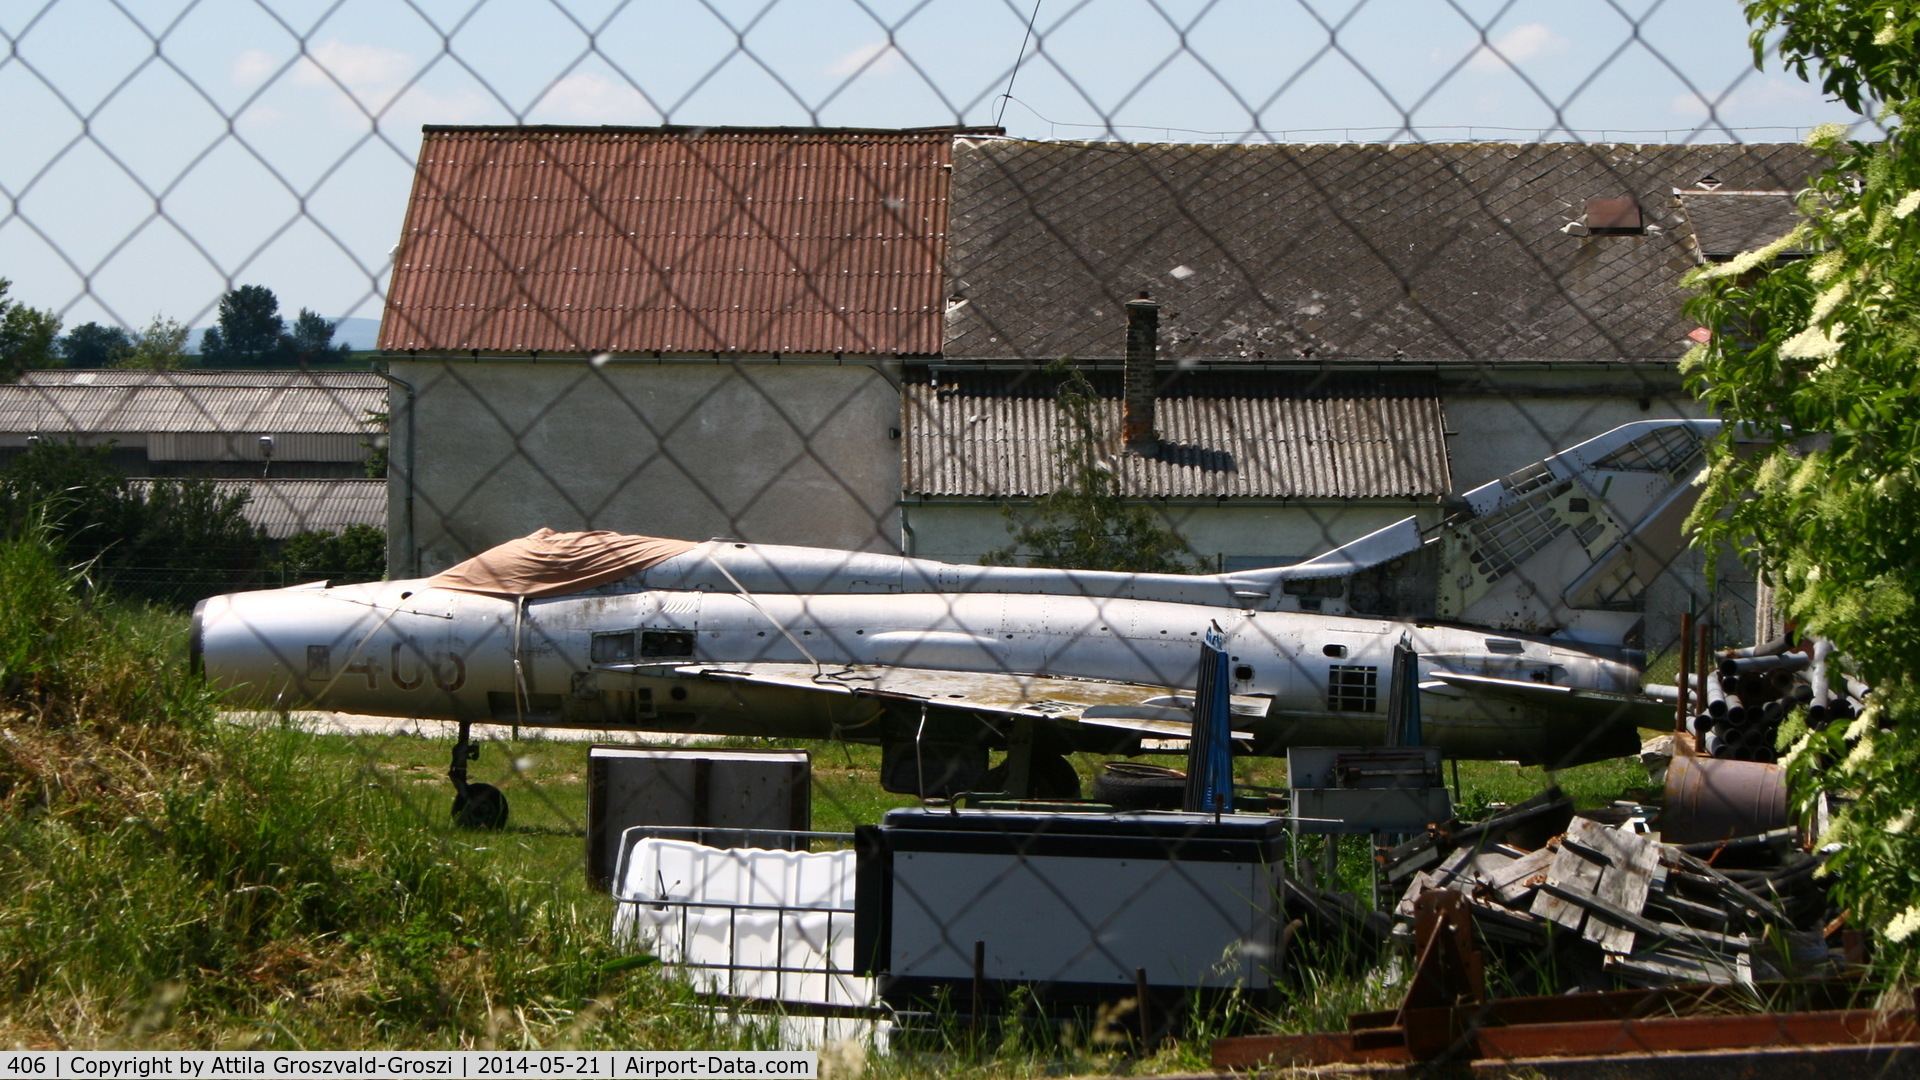 406, 1964 Mikoyan-Gurevich MiG-21PF C/N 760406, Kövesgyür-puszta, Hungary. A collector's site